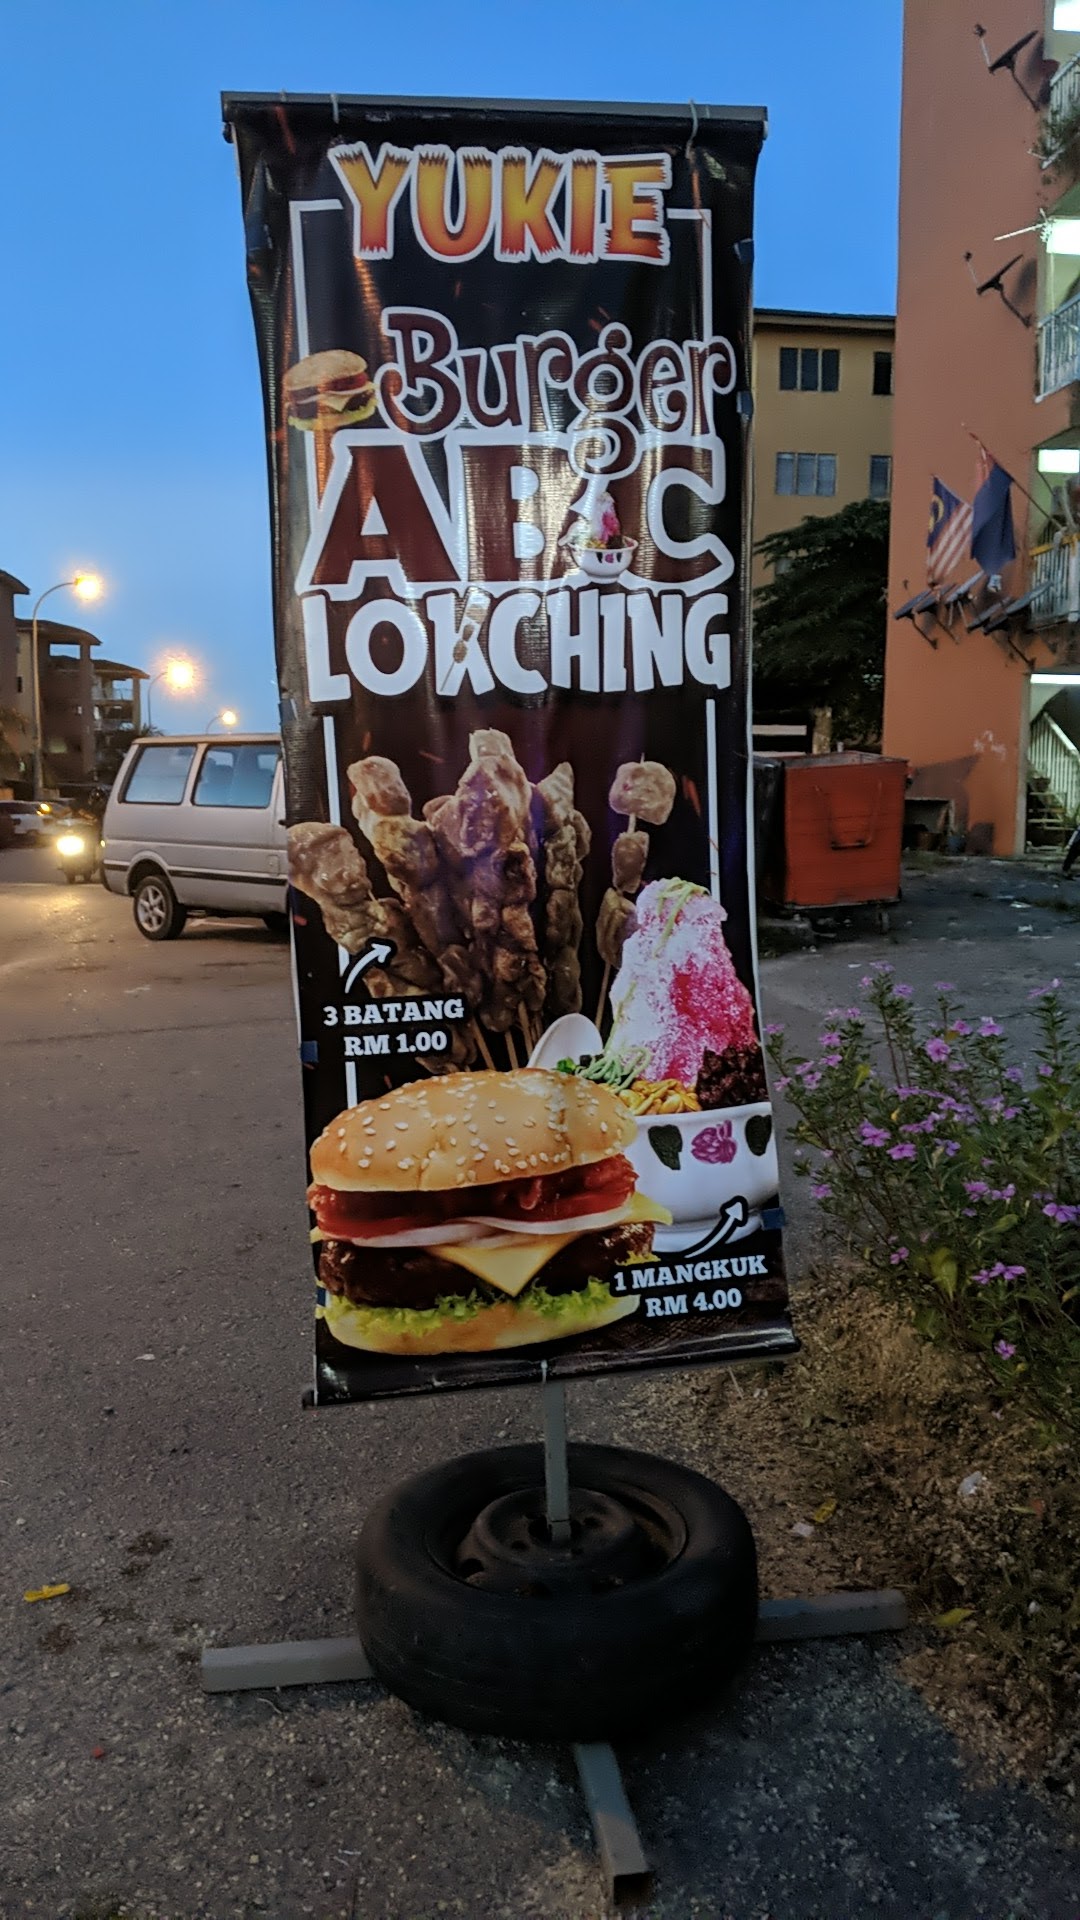 Yukie Burger ABC Lokching